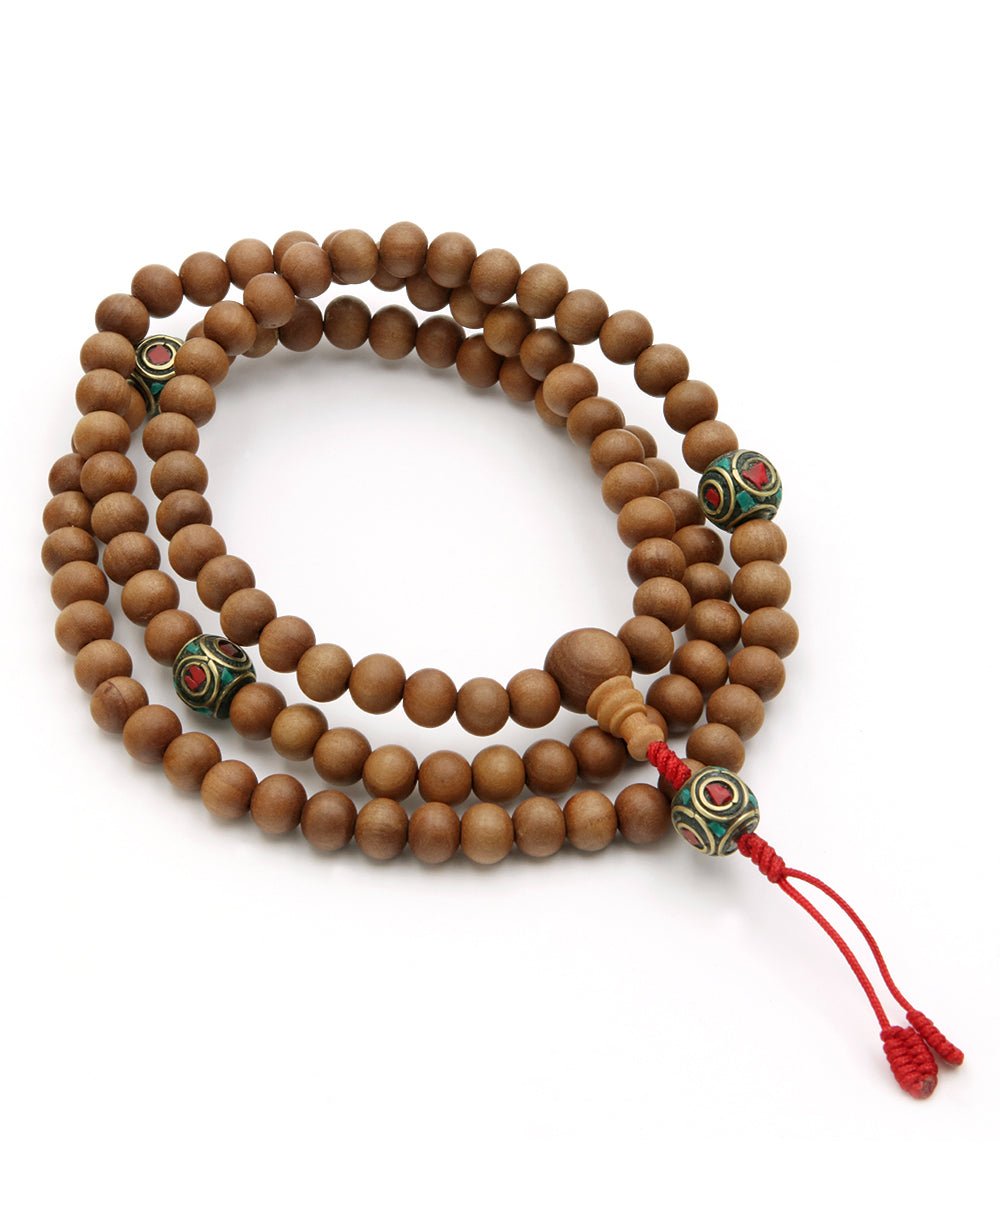 Mala Beads and Buddhist Japa Mala For Meditation & Yoga Practice – Buddha  Groove